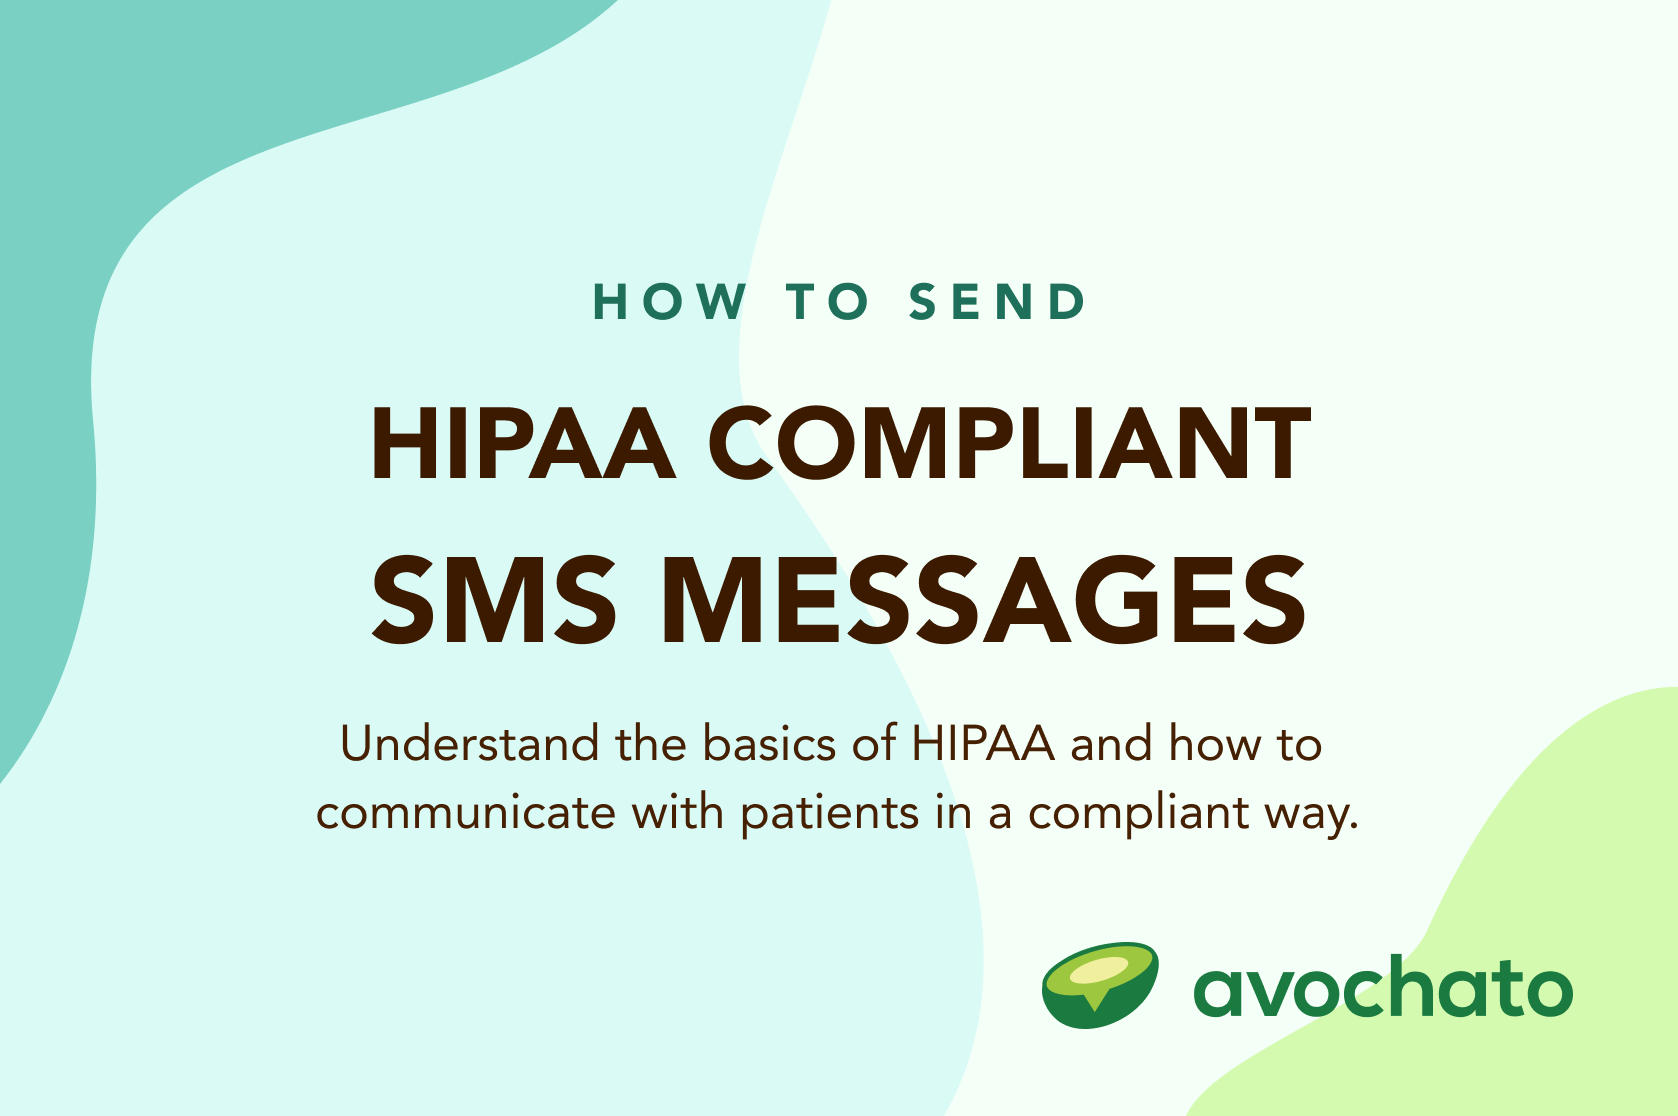 HIPAA compliant SMS